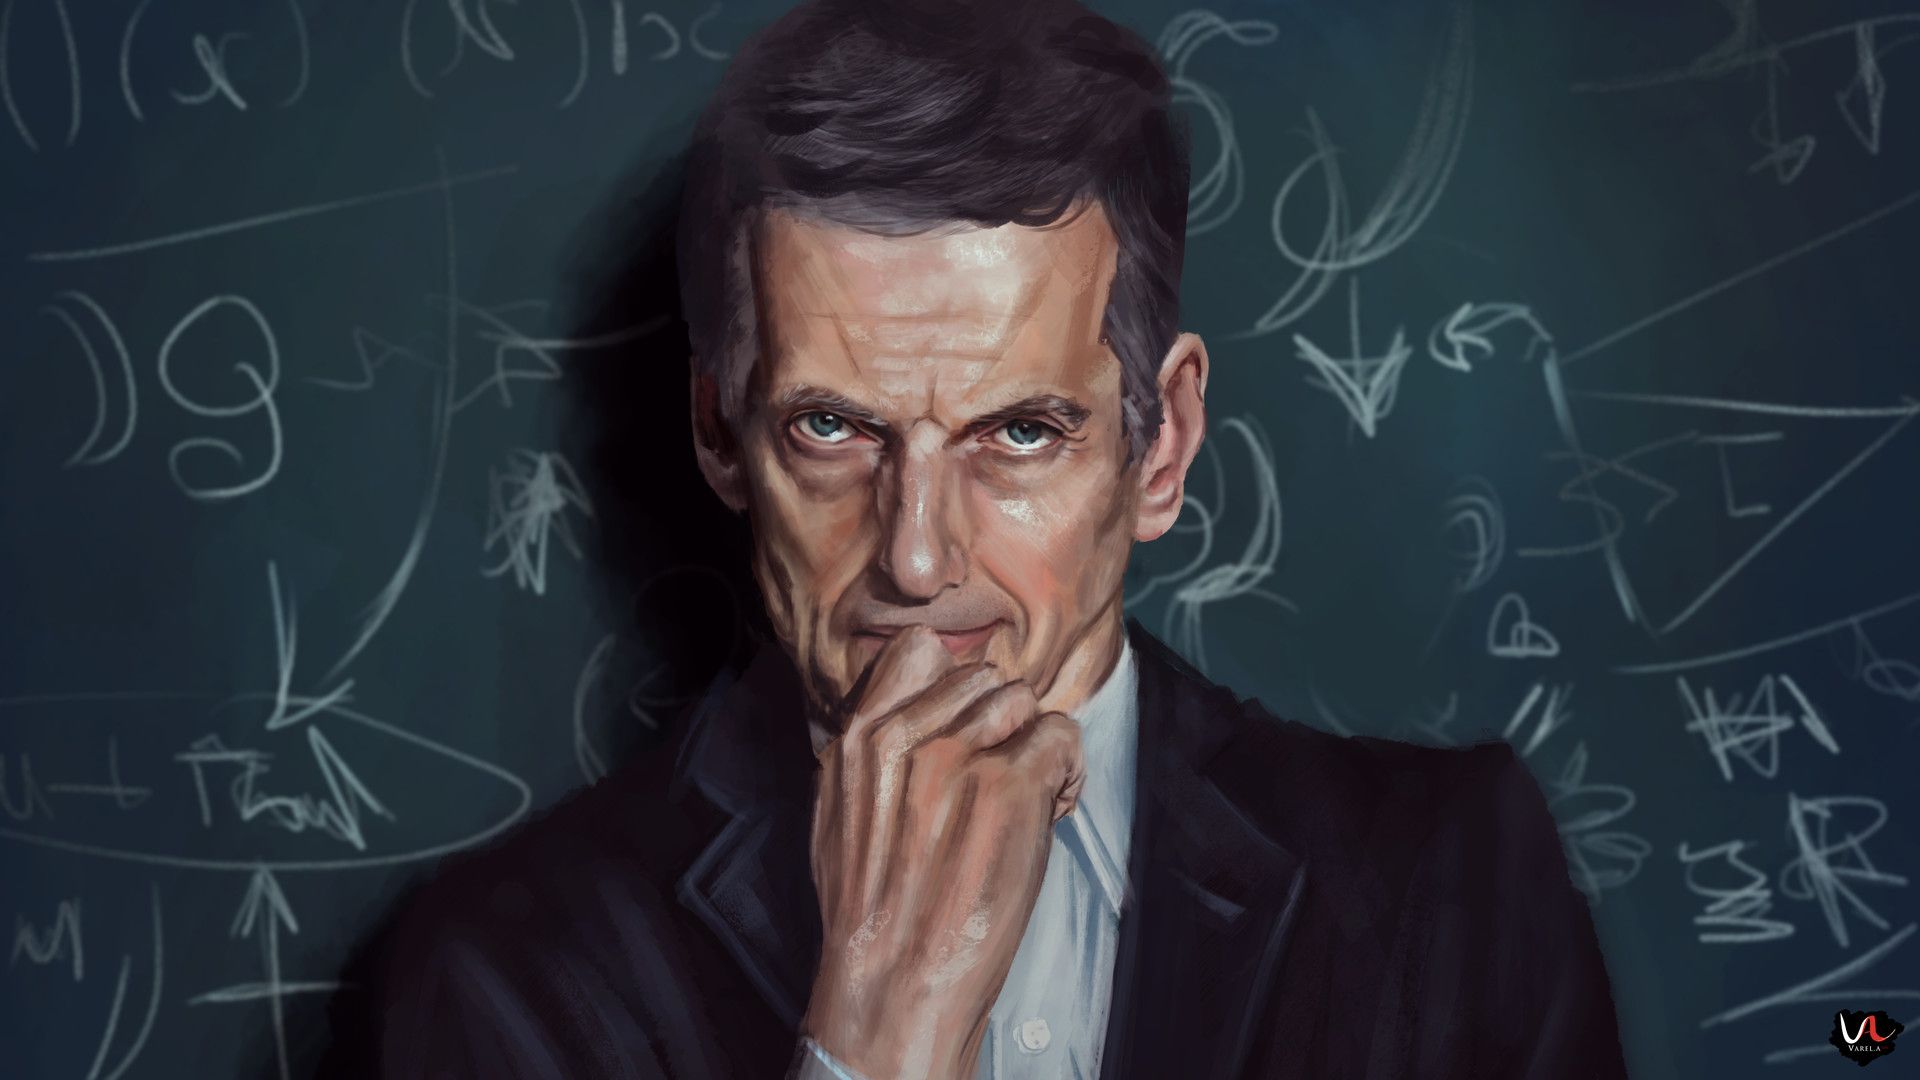 Wallpaper Doctor who TV show, Peter Capaldi, face, art